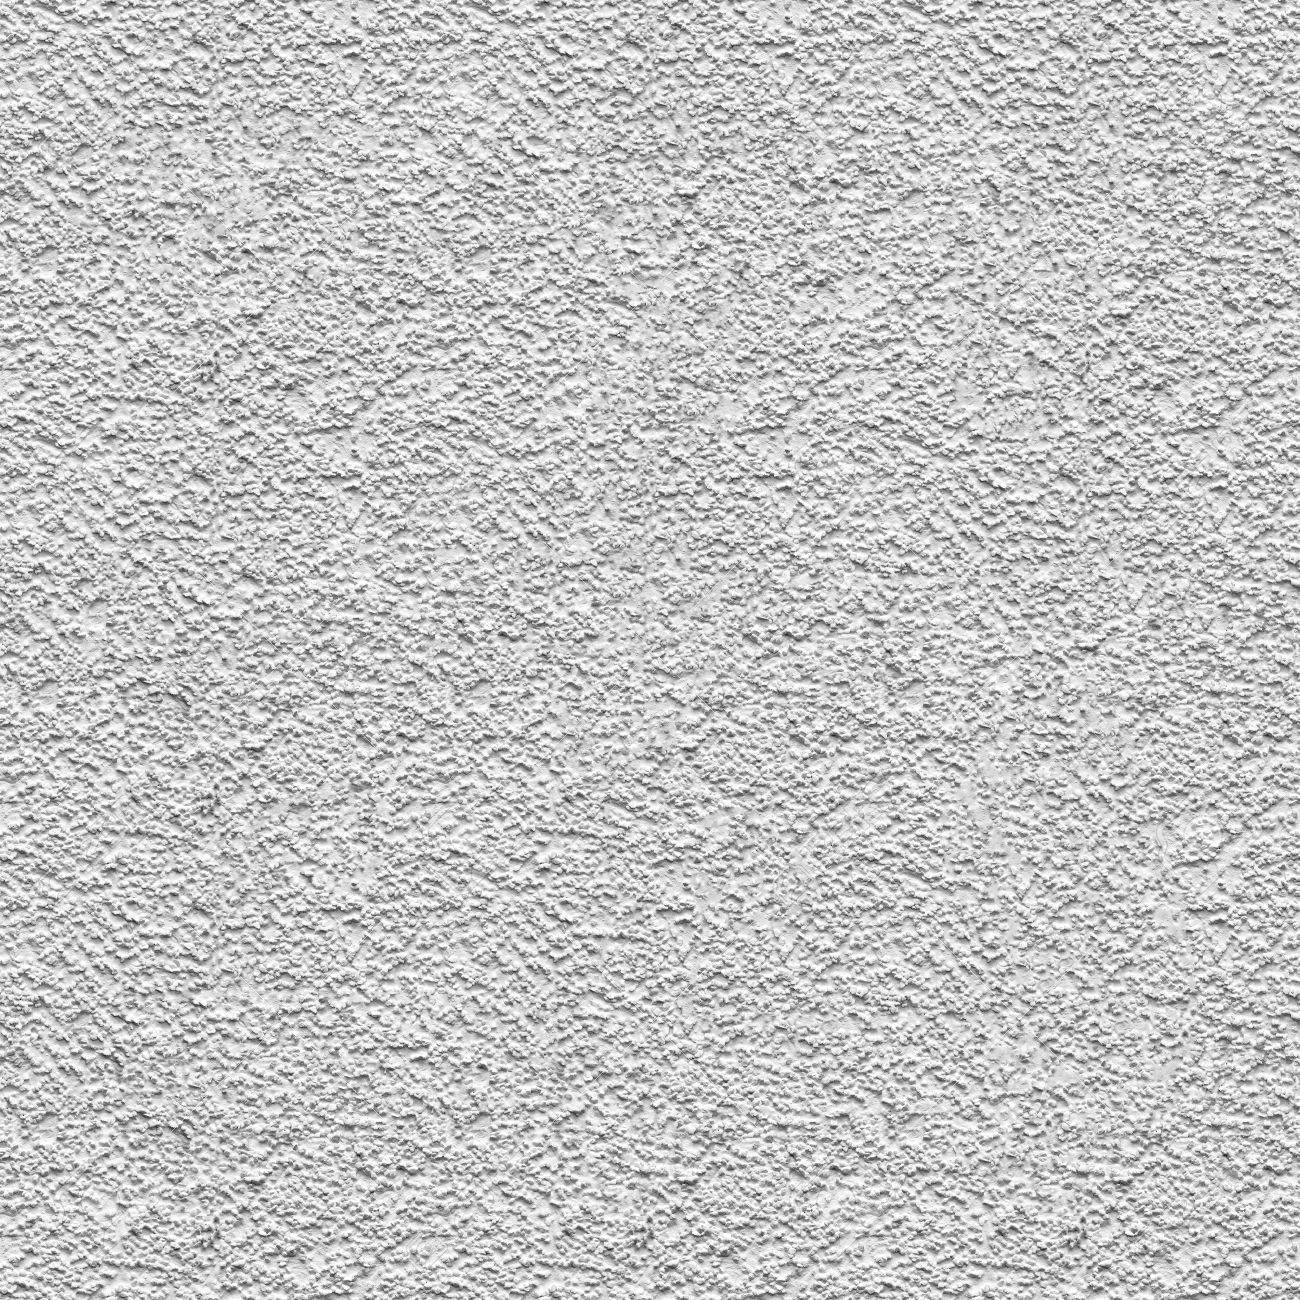 Clean White Seamless Concrete Pebble Dash Wall Background Texture